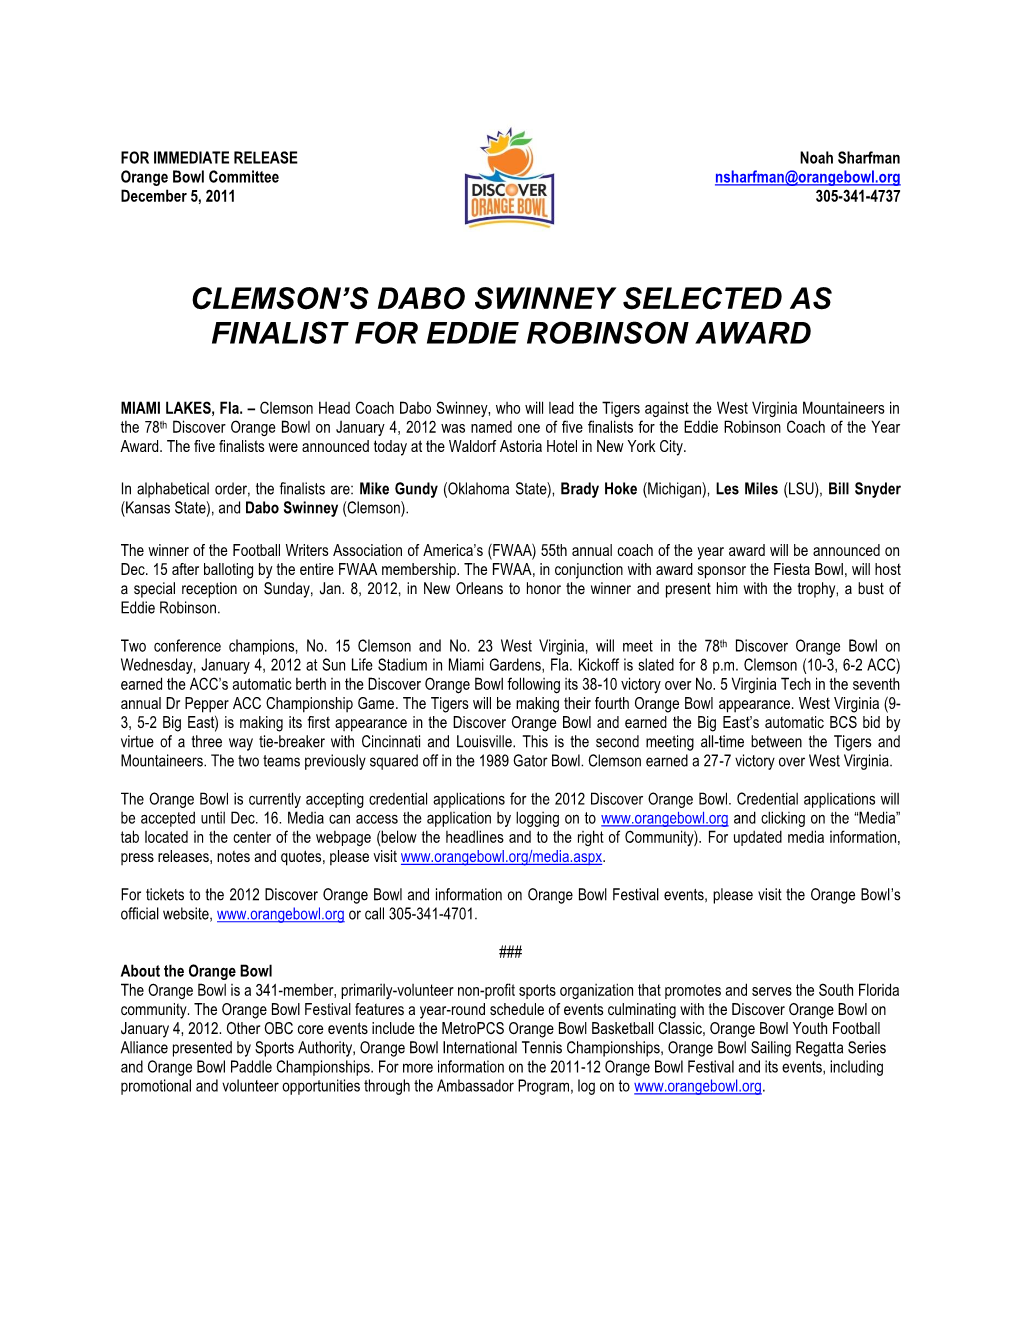 Clemson's Dabo Swinney Selected As Finalist for Eddie Robinson Award